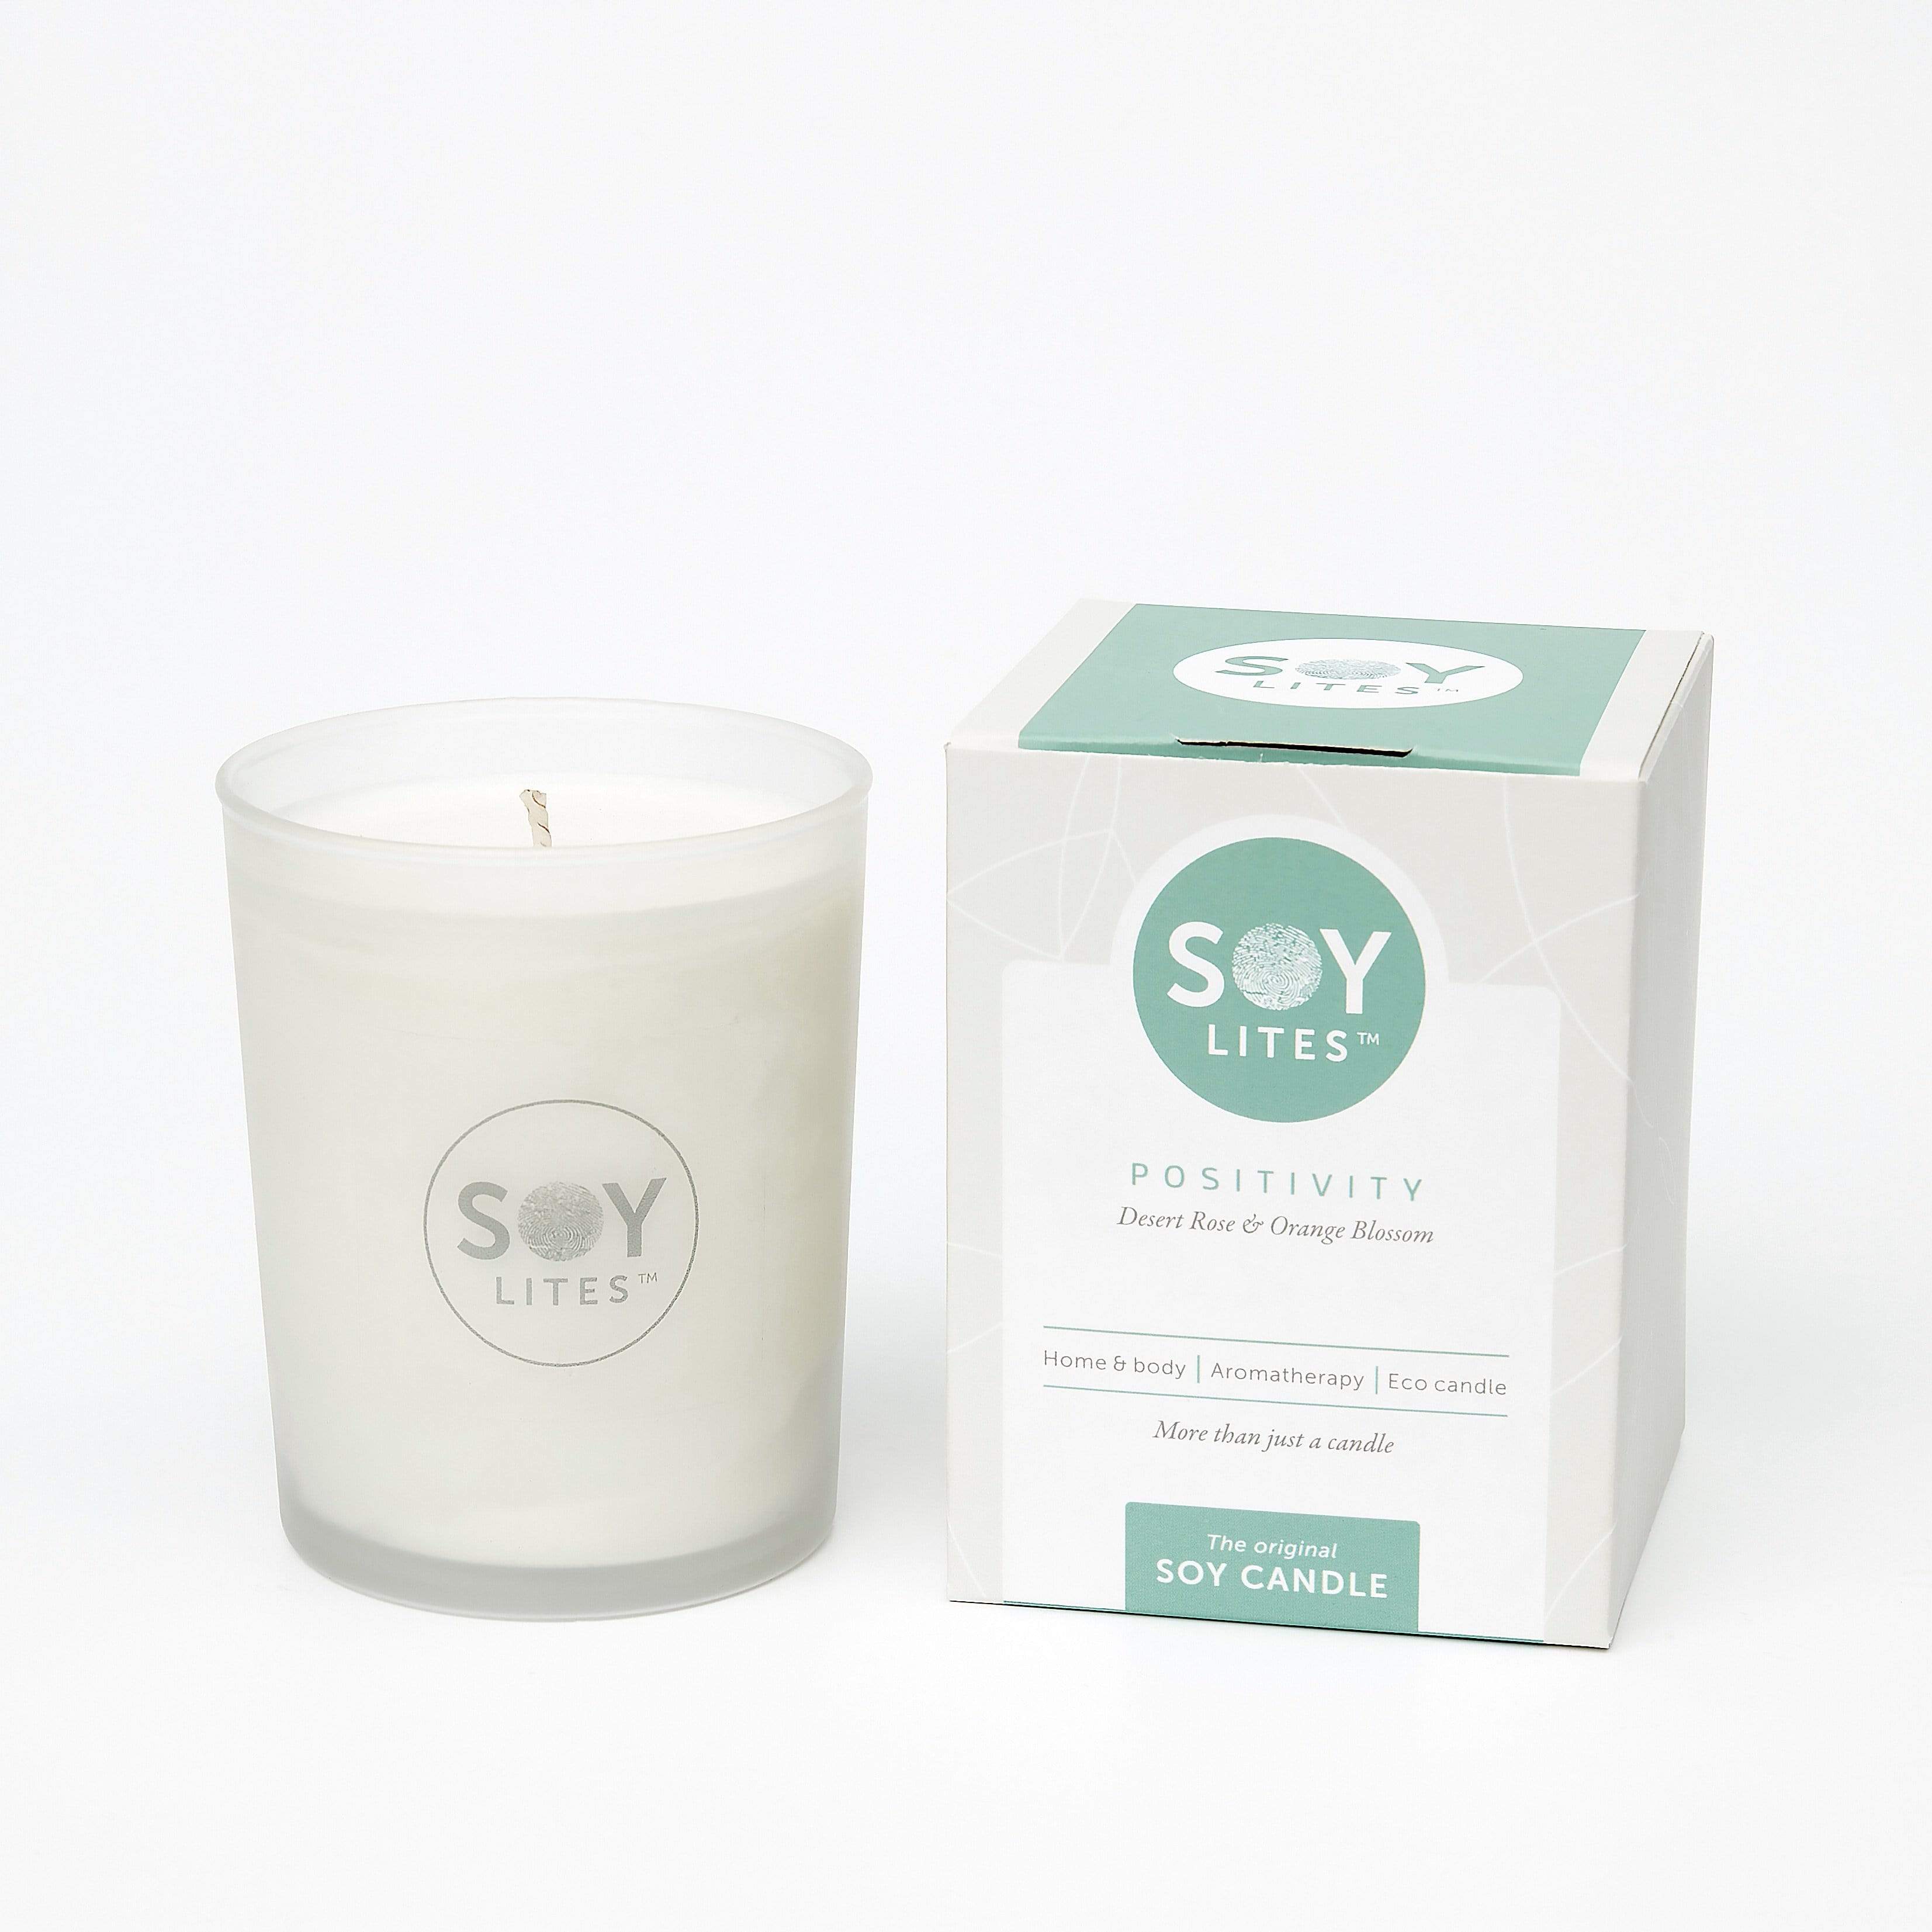 SoyLites Positivity soy massage candle with desert rose and orange blossom